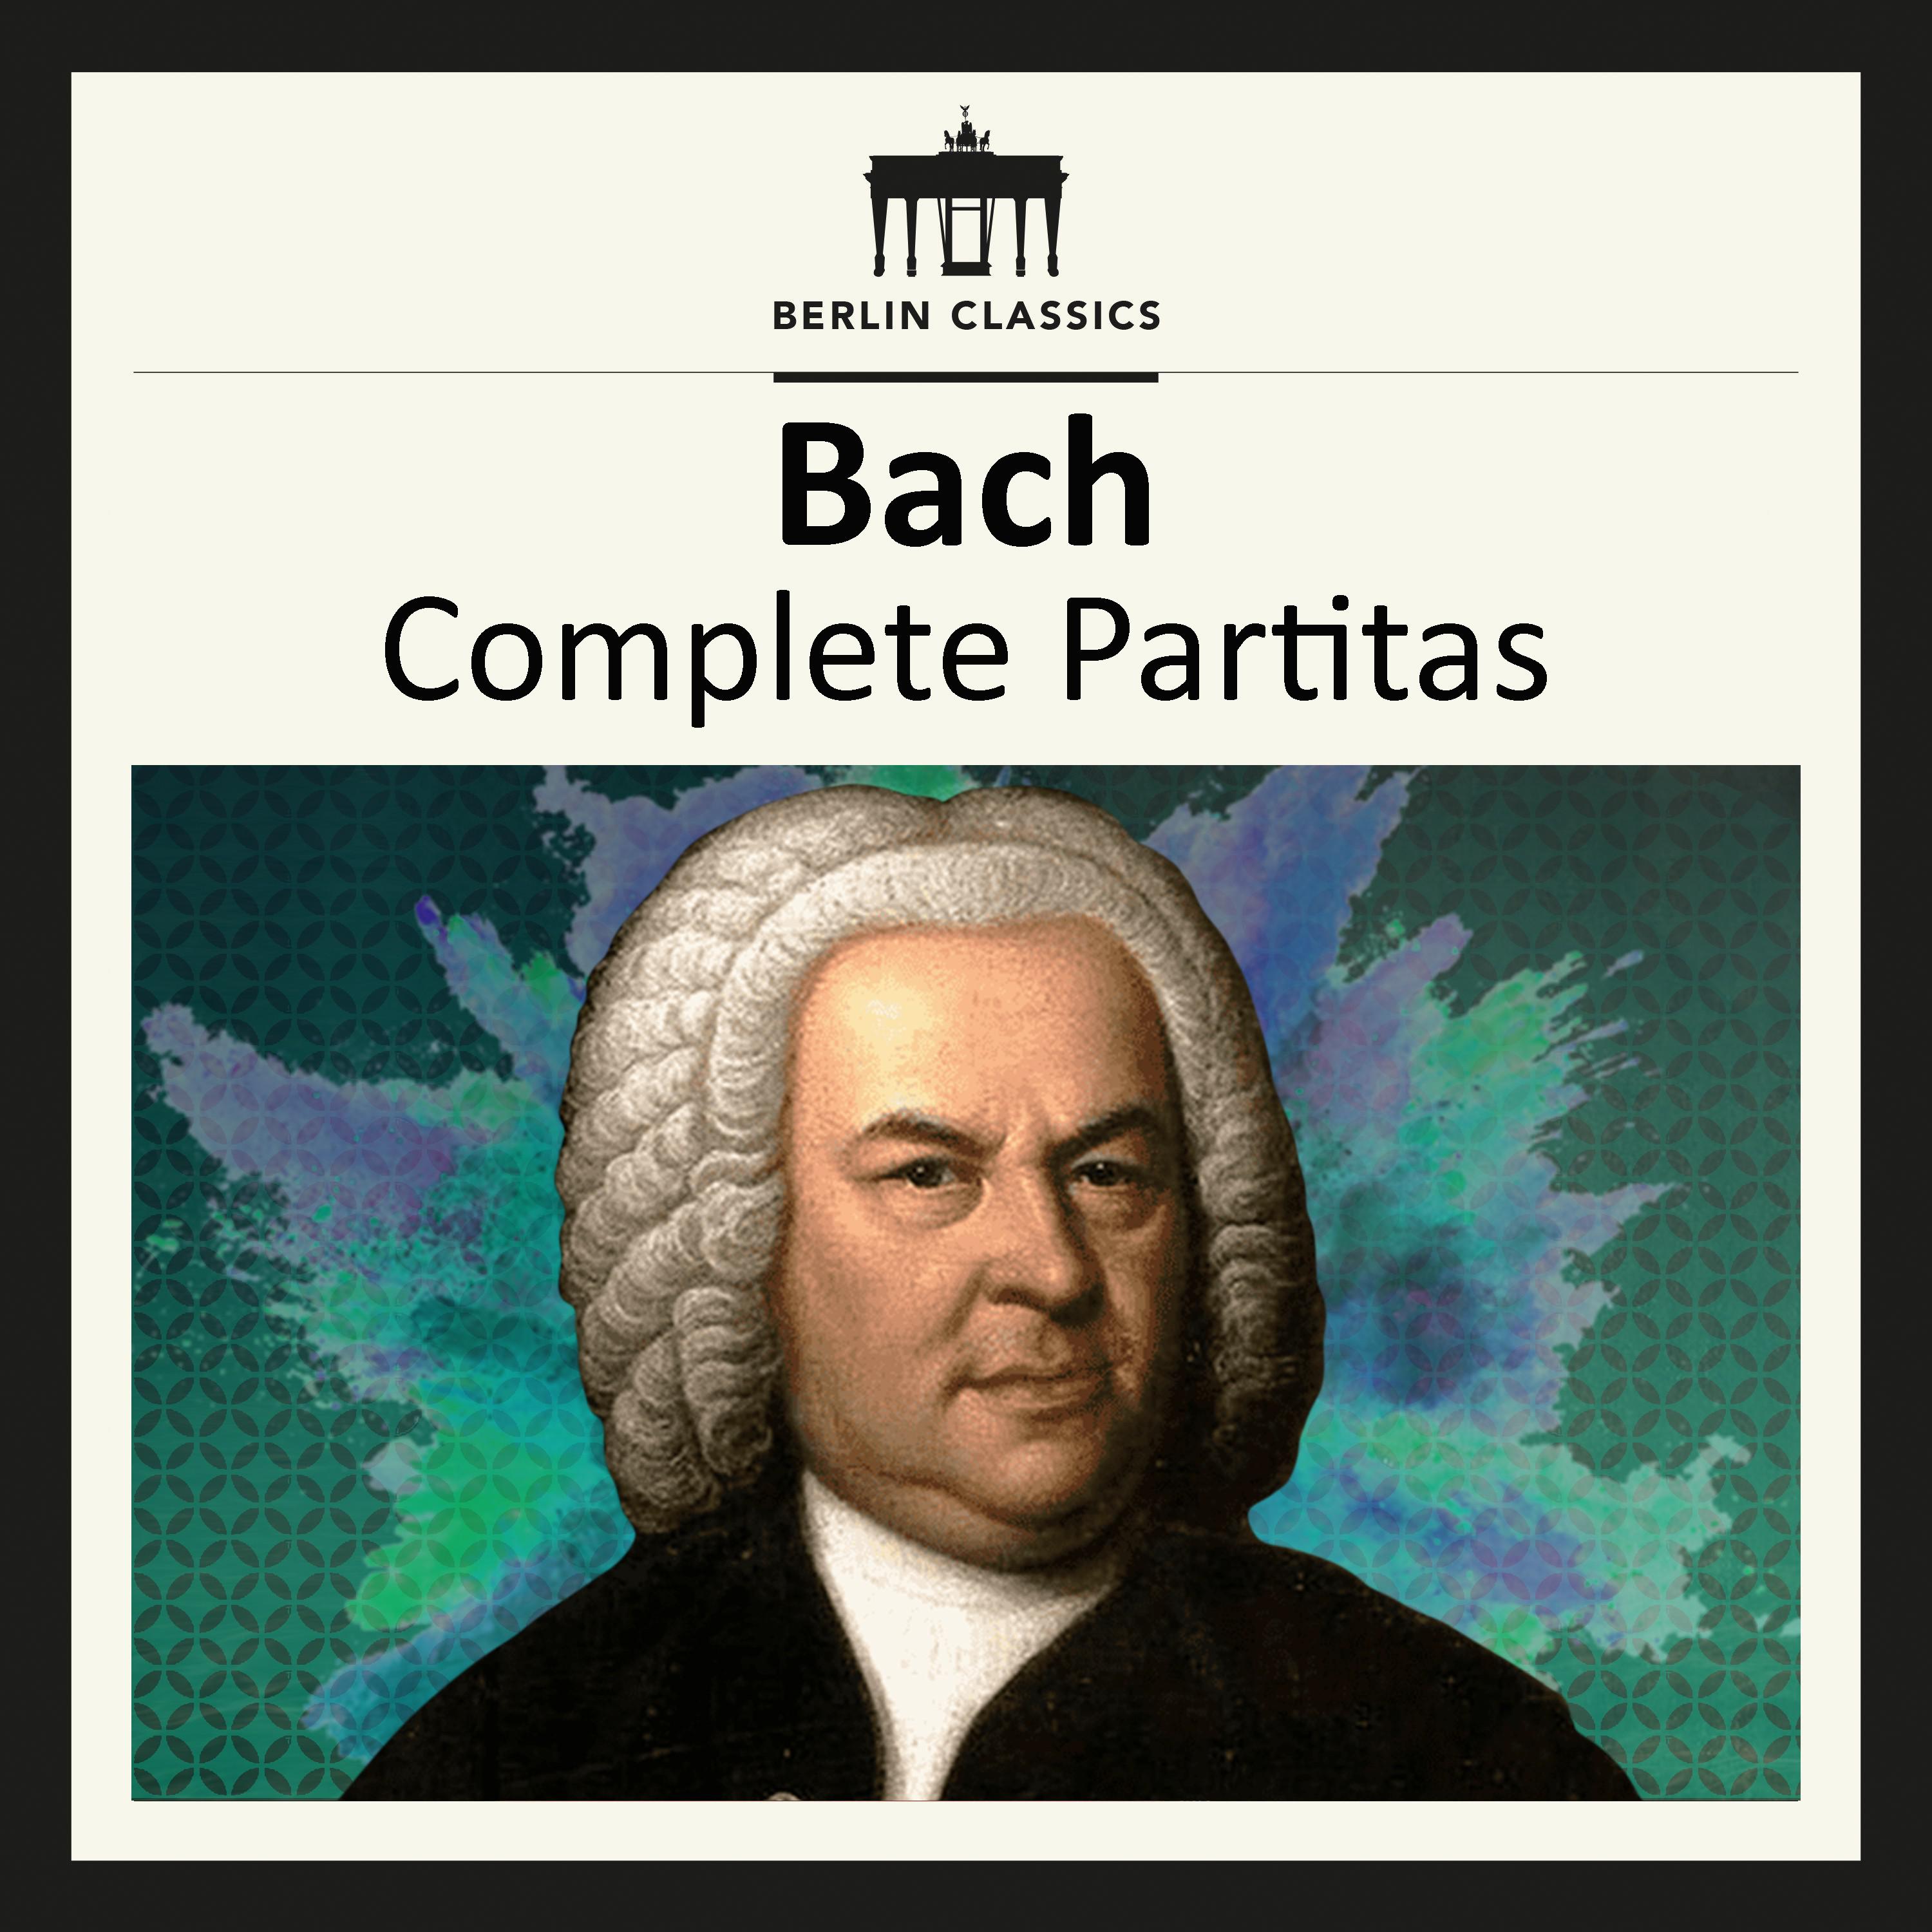 Partita No. 1 in B-Flat Major, BWV 825: I. Praeludium